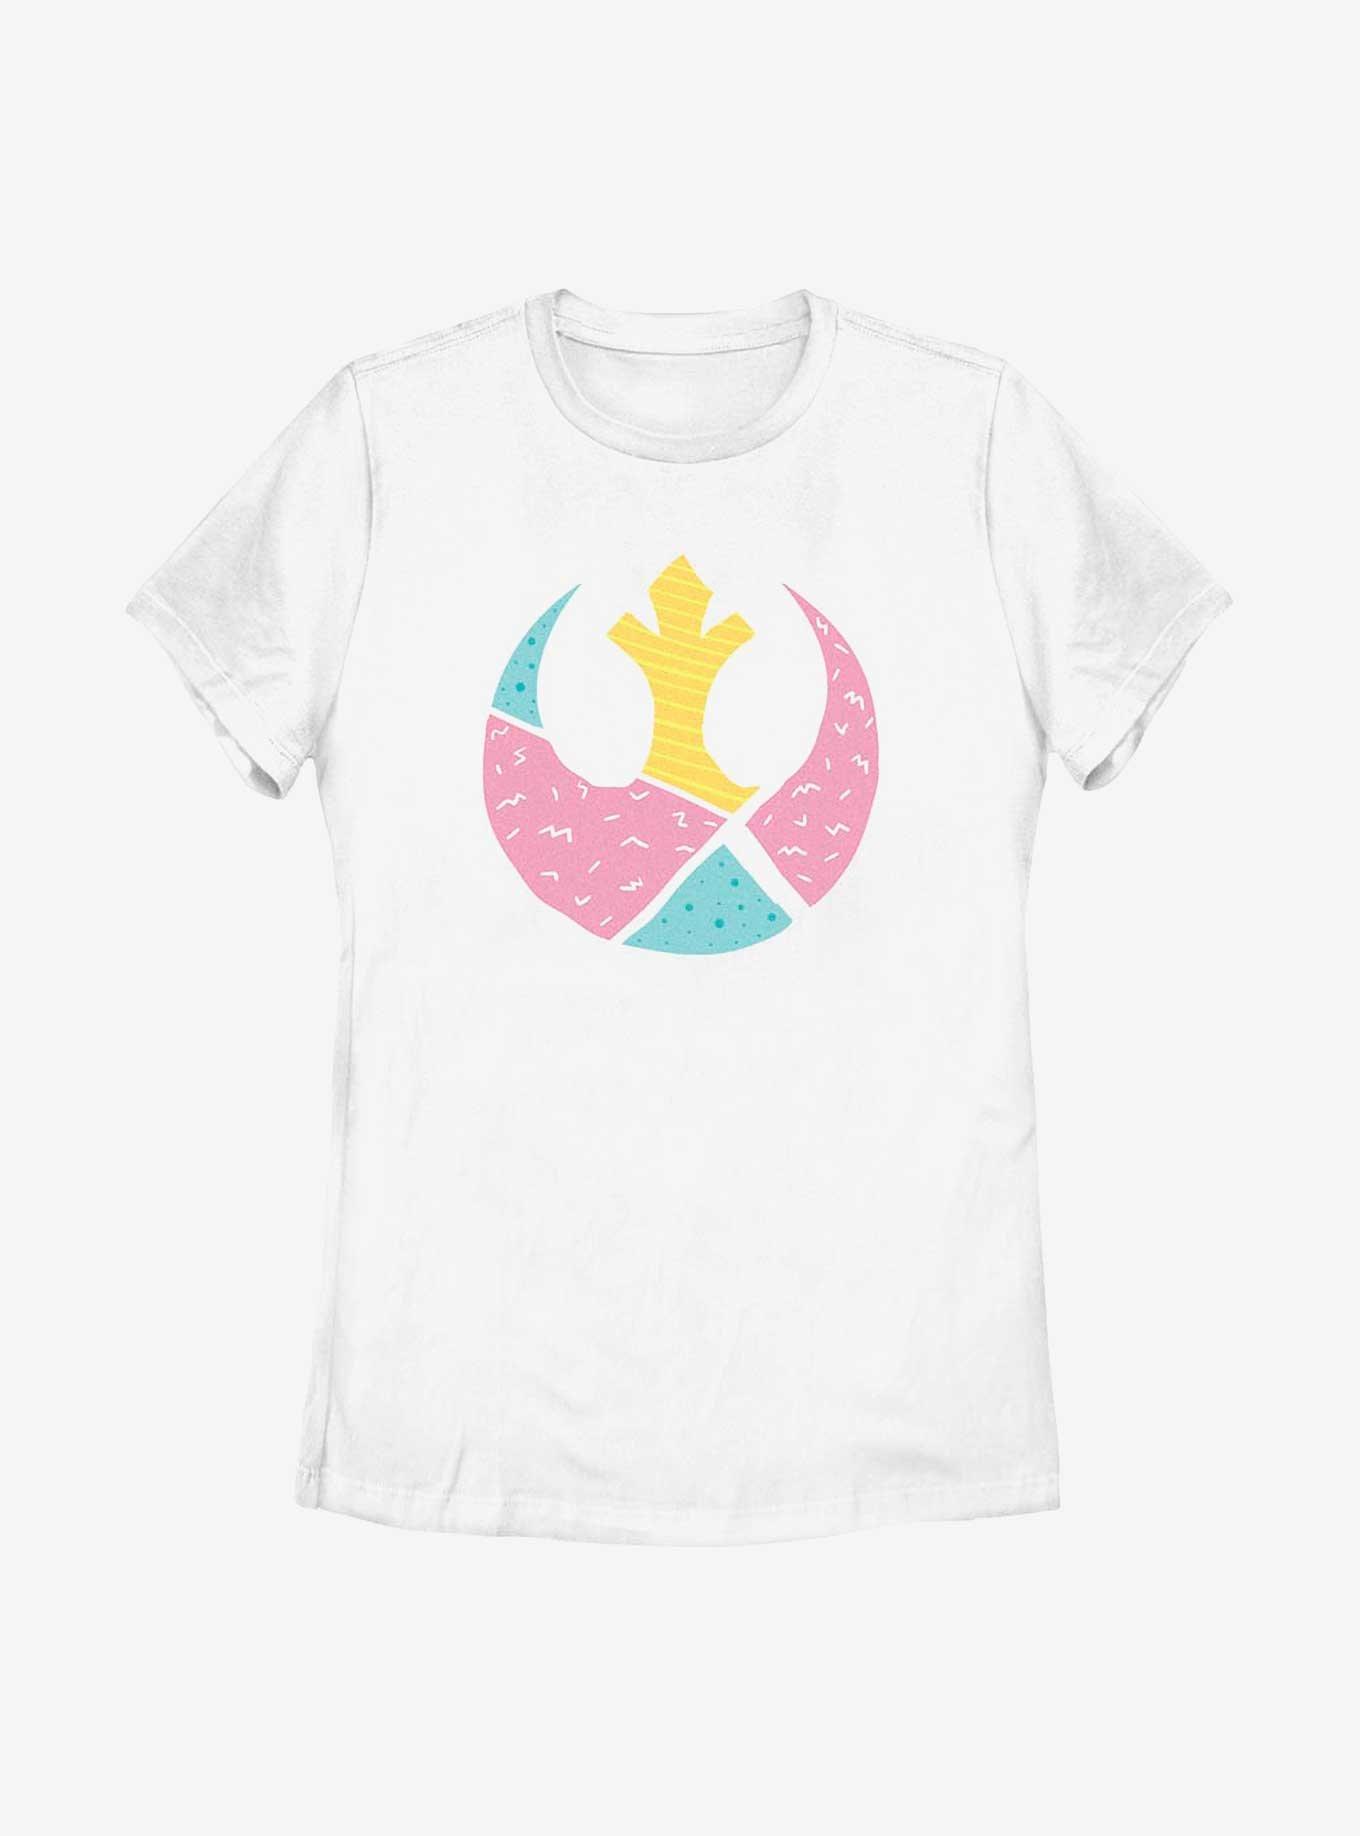 Star Wars Geometric Shaped Rebel Symbol Womens T-Shirt, WHITE, hi-res